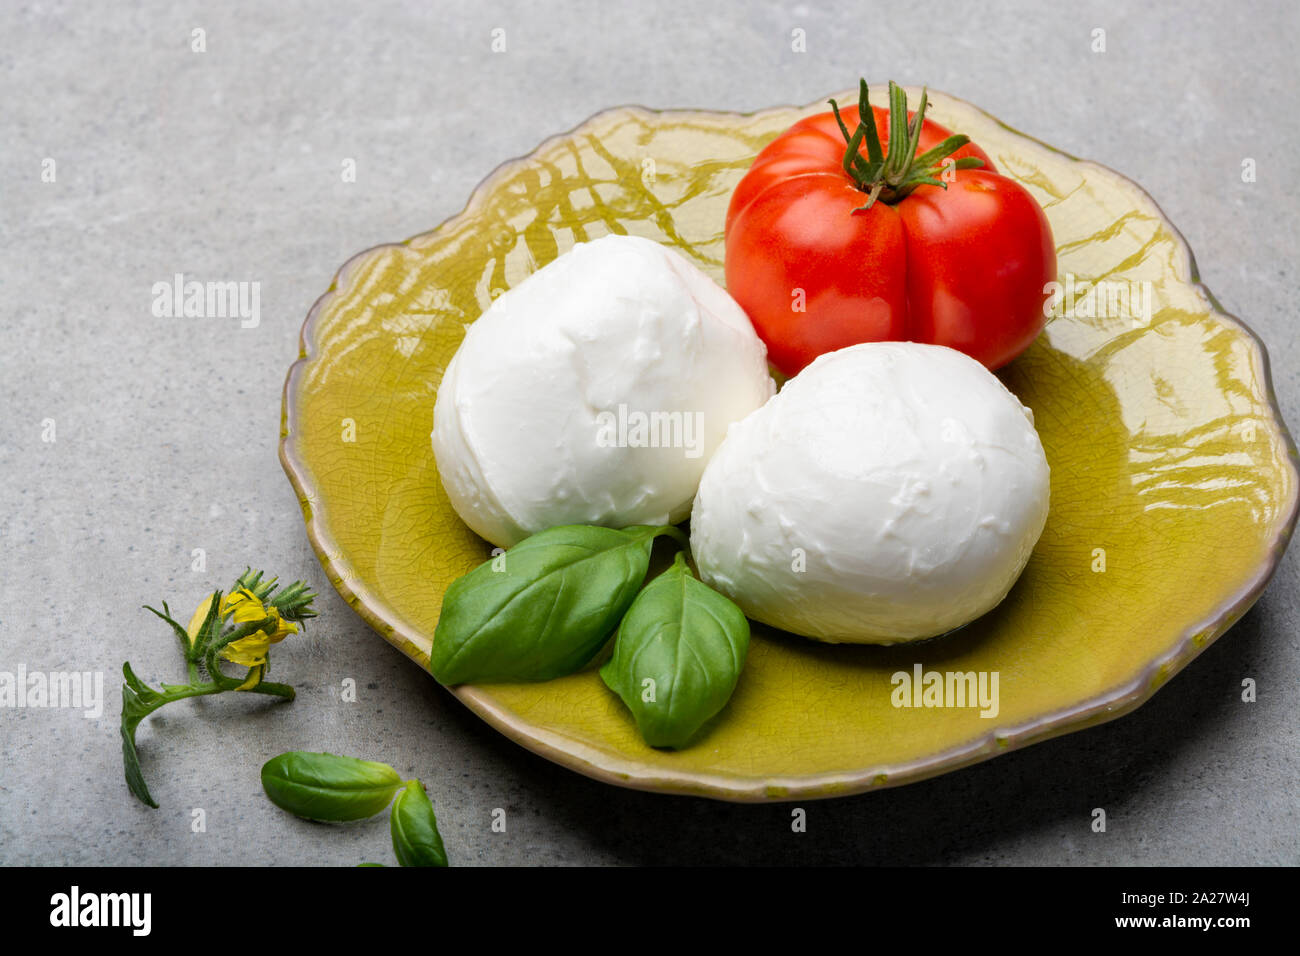 Cheese collection, Italian soft white cheese mozzarella in balls with tomato and basil Stock Photo